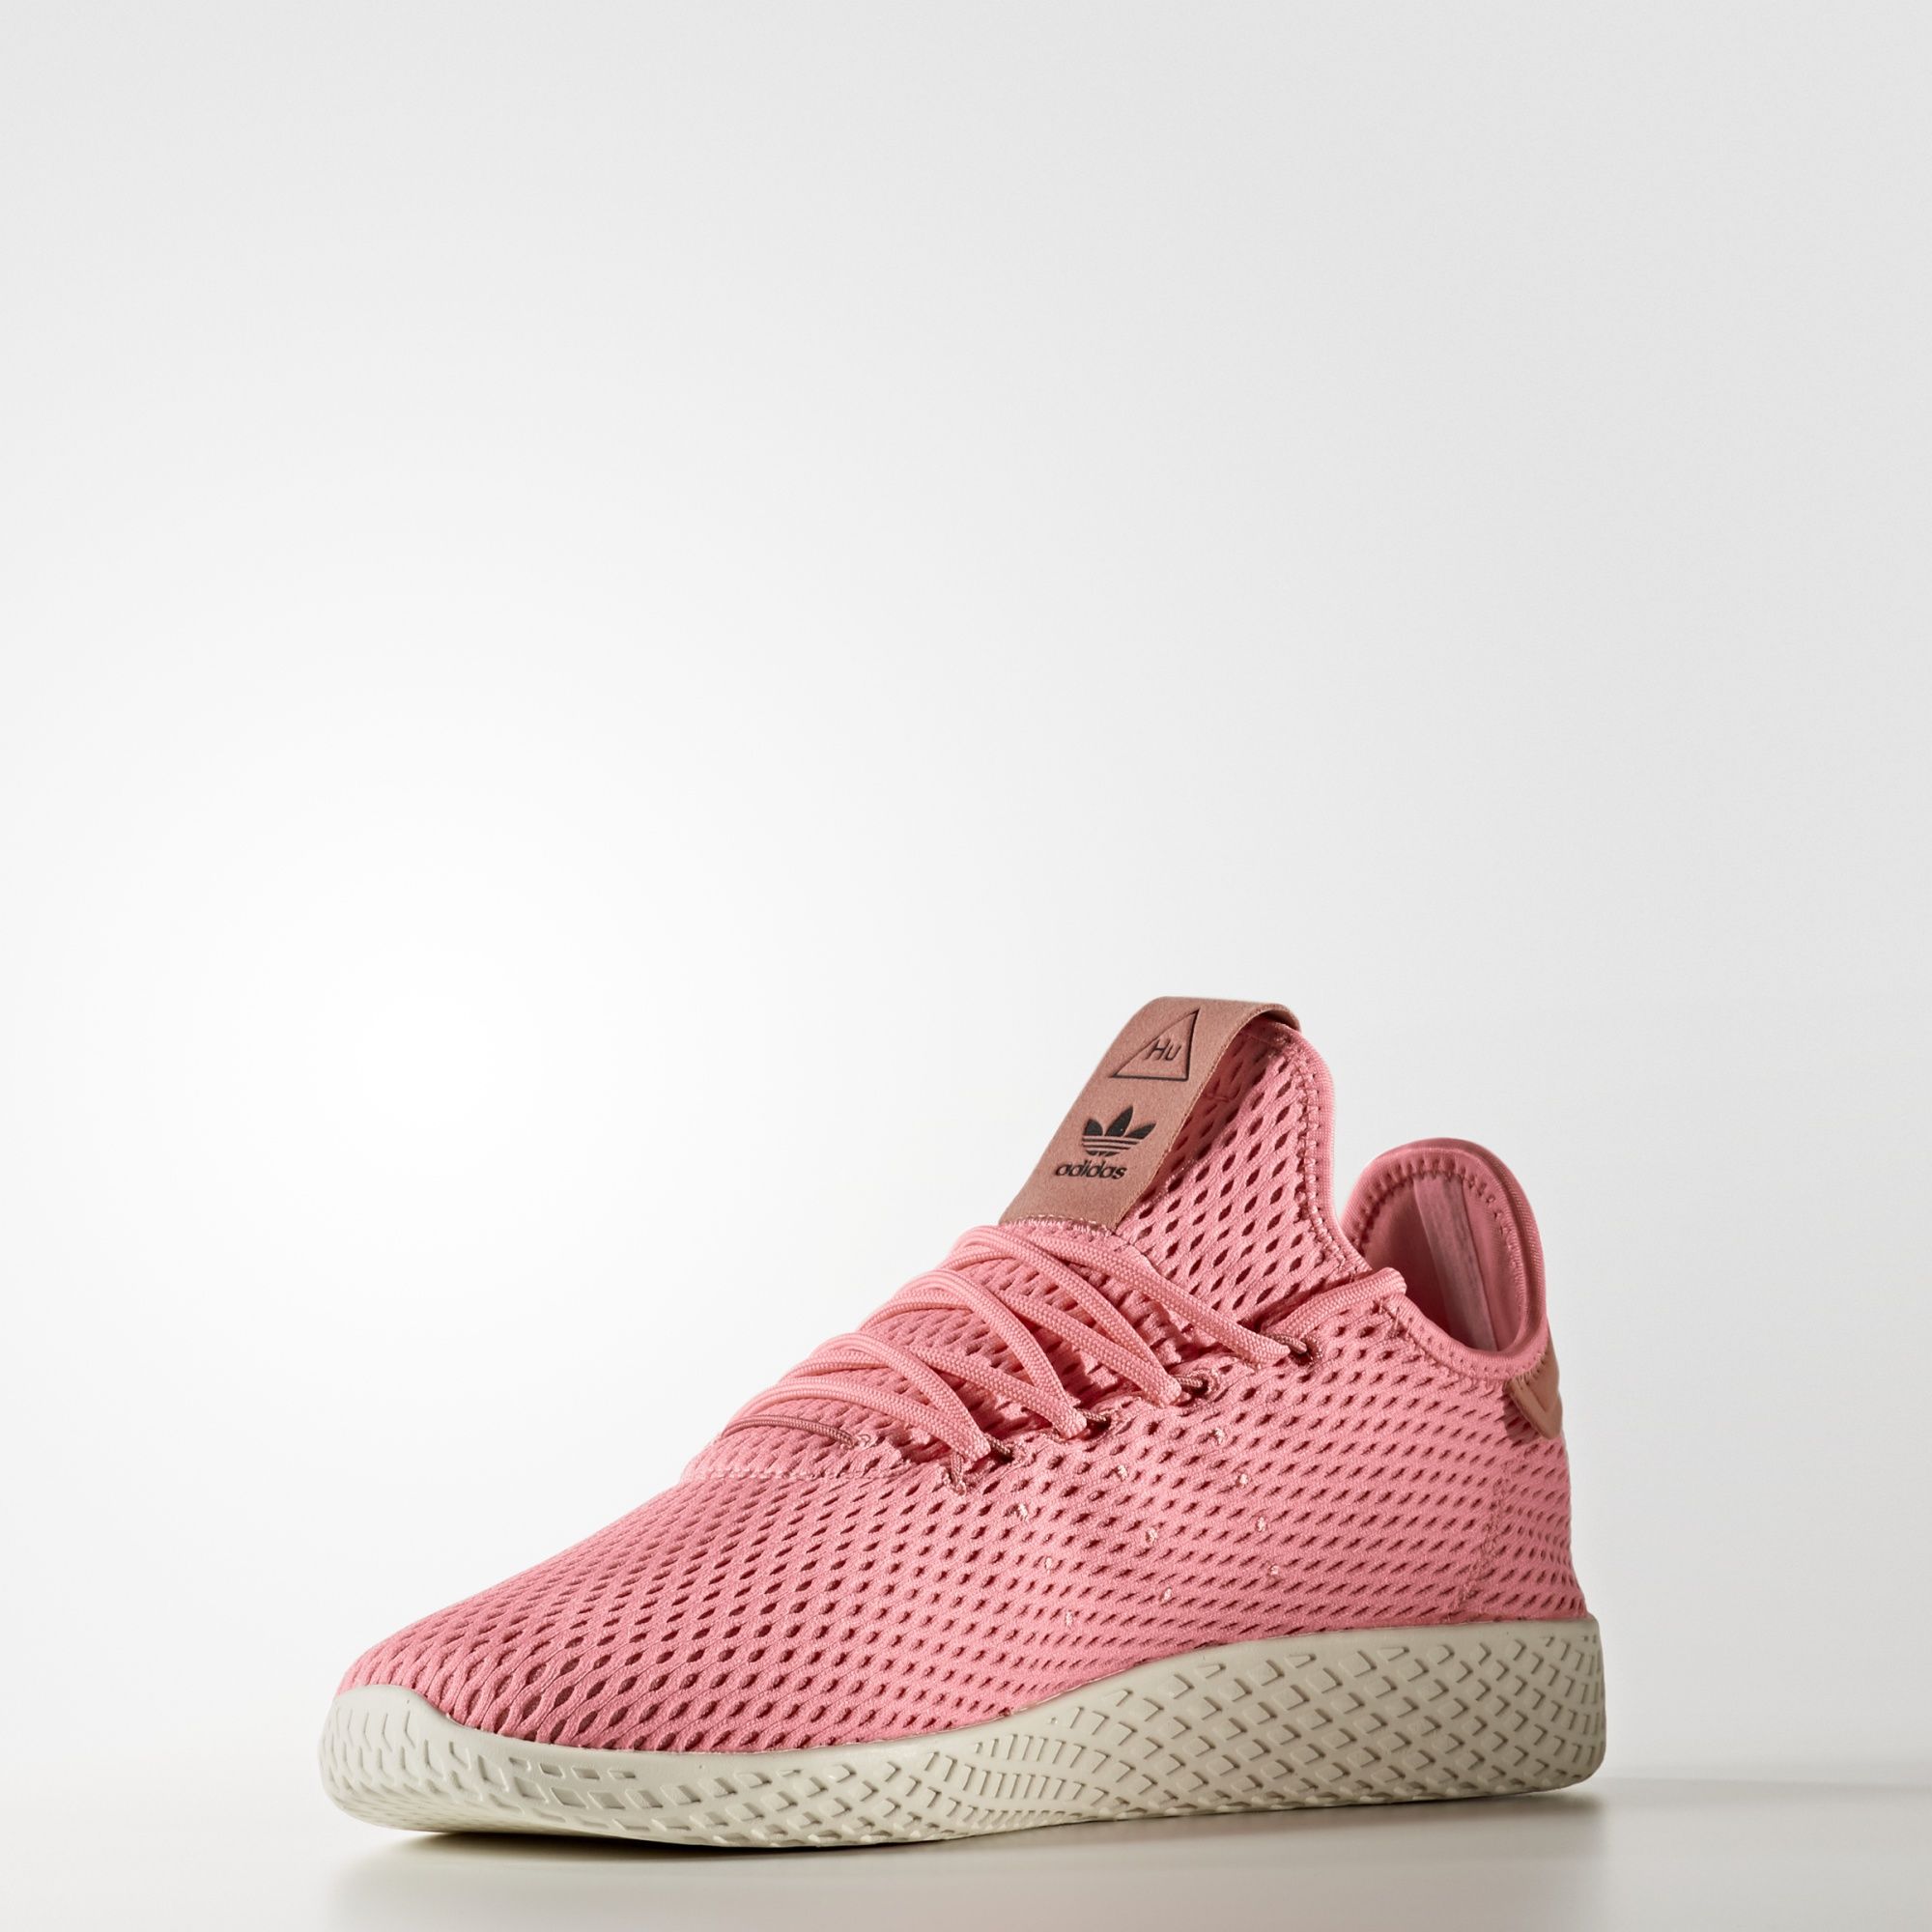 adidas-pharrell-williams-tennis-hu-tactile-rose-raw-pink-3